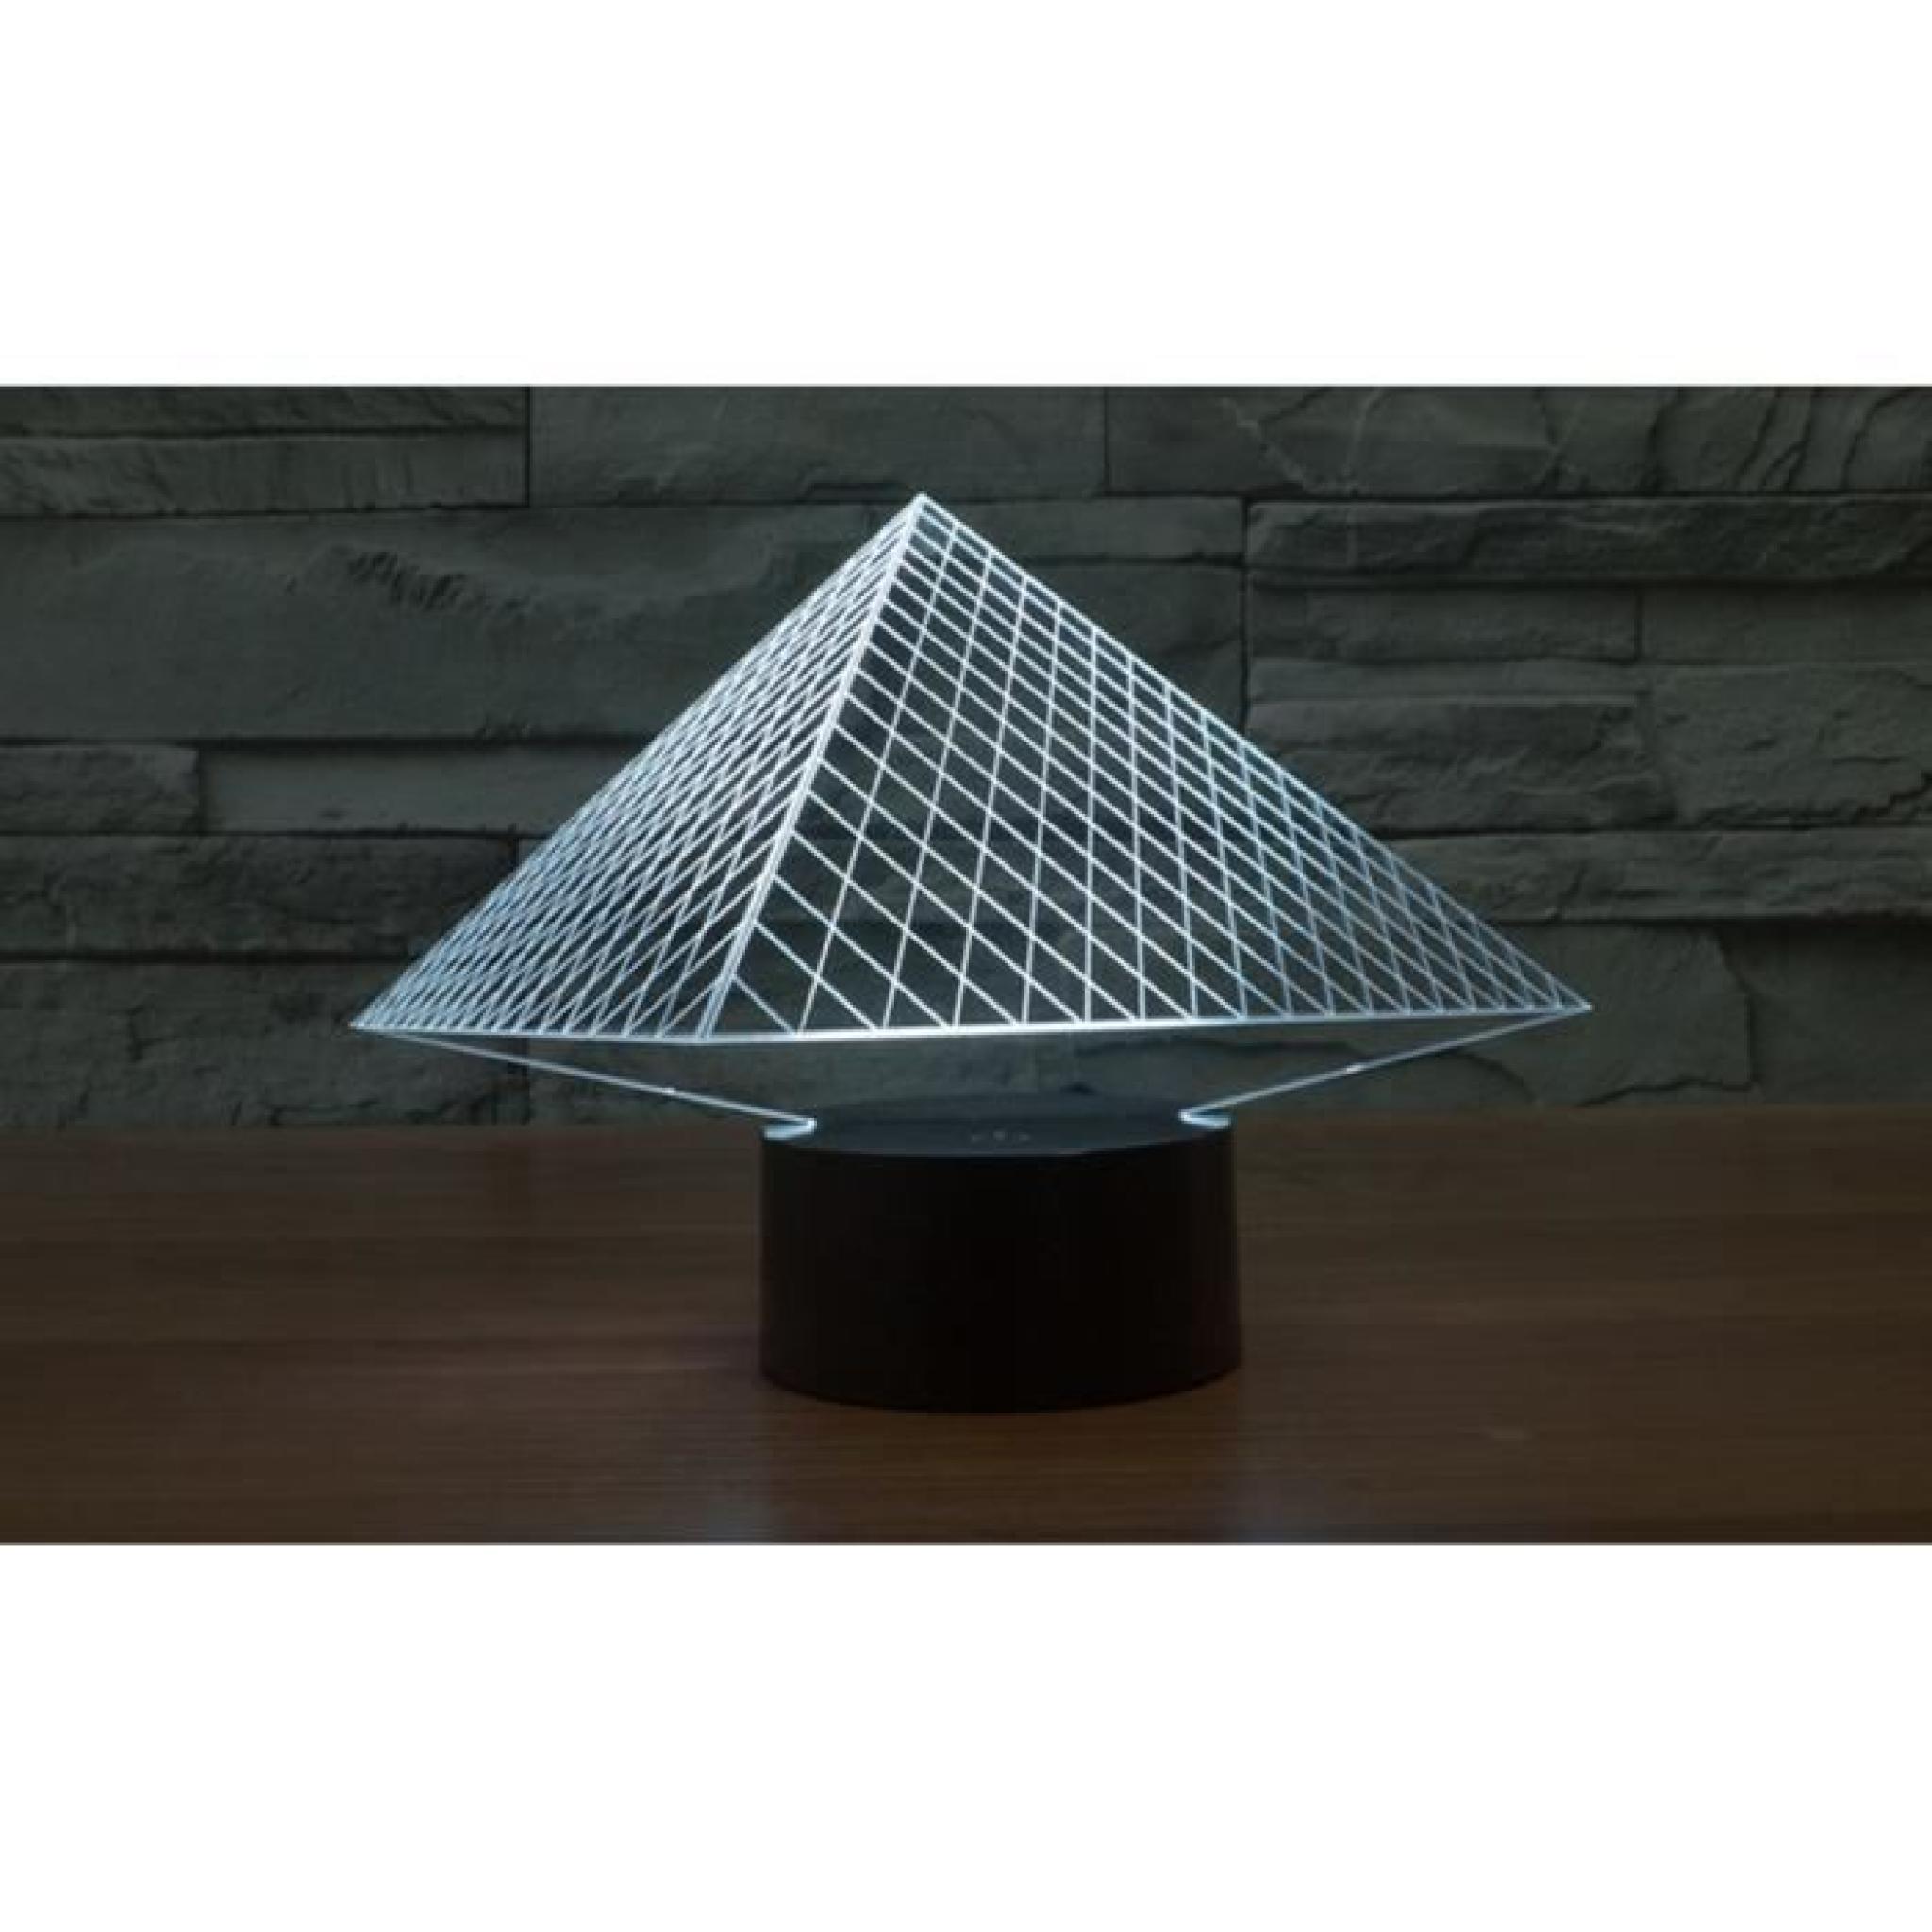 Lampe Creative pyramide 3D pas cher